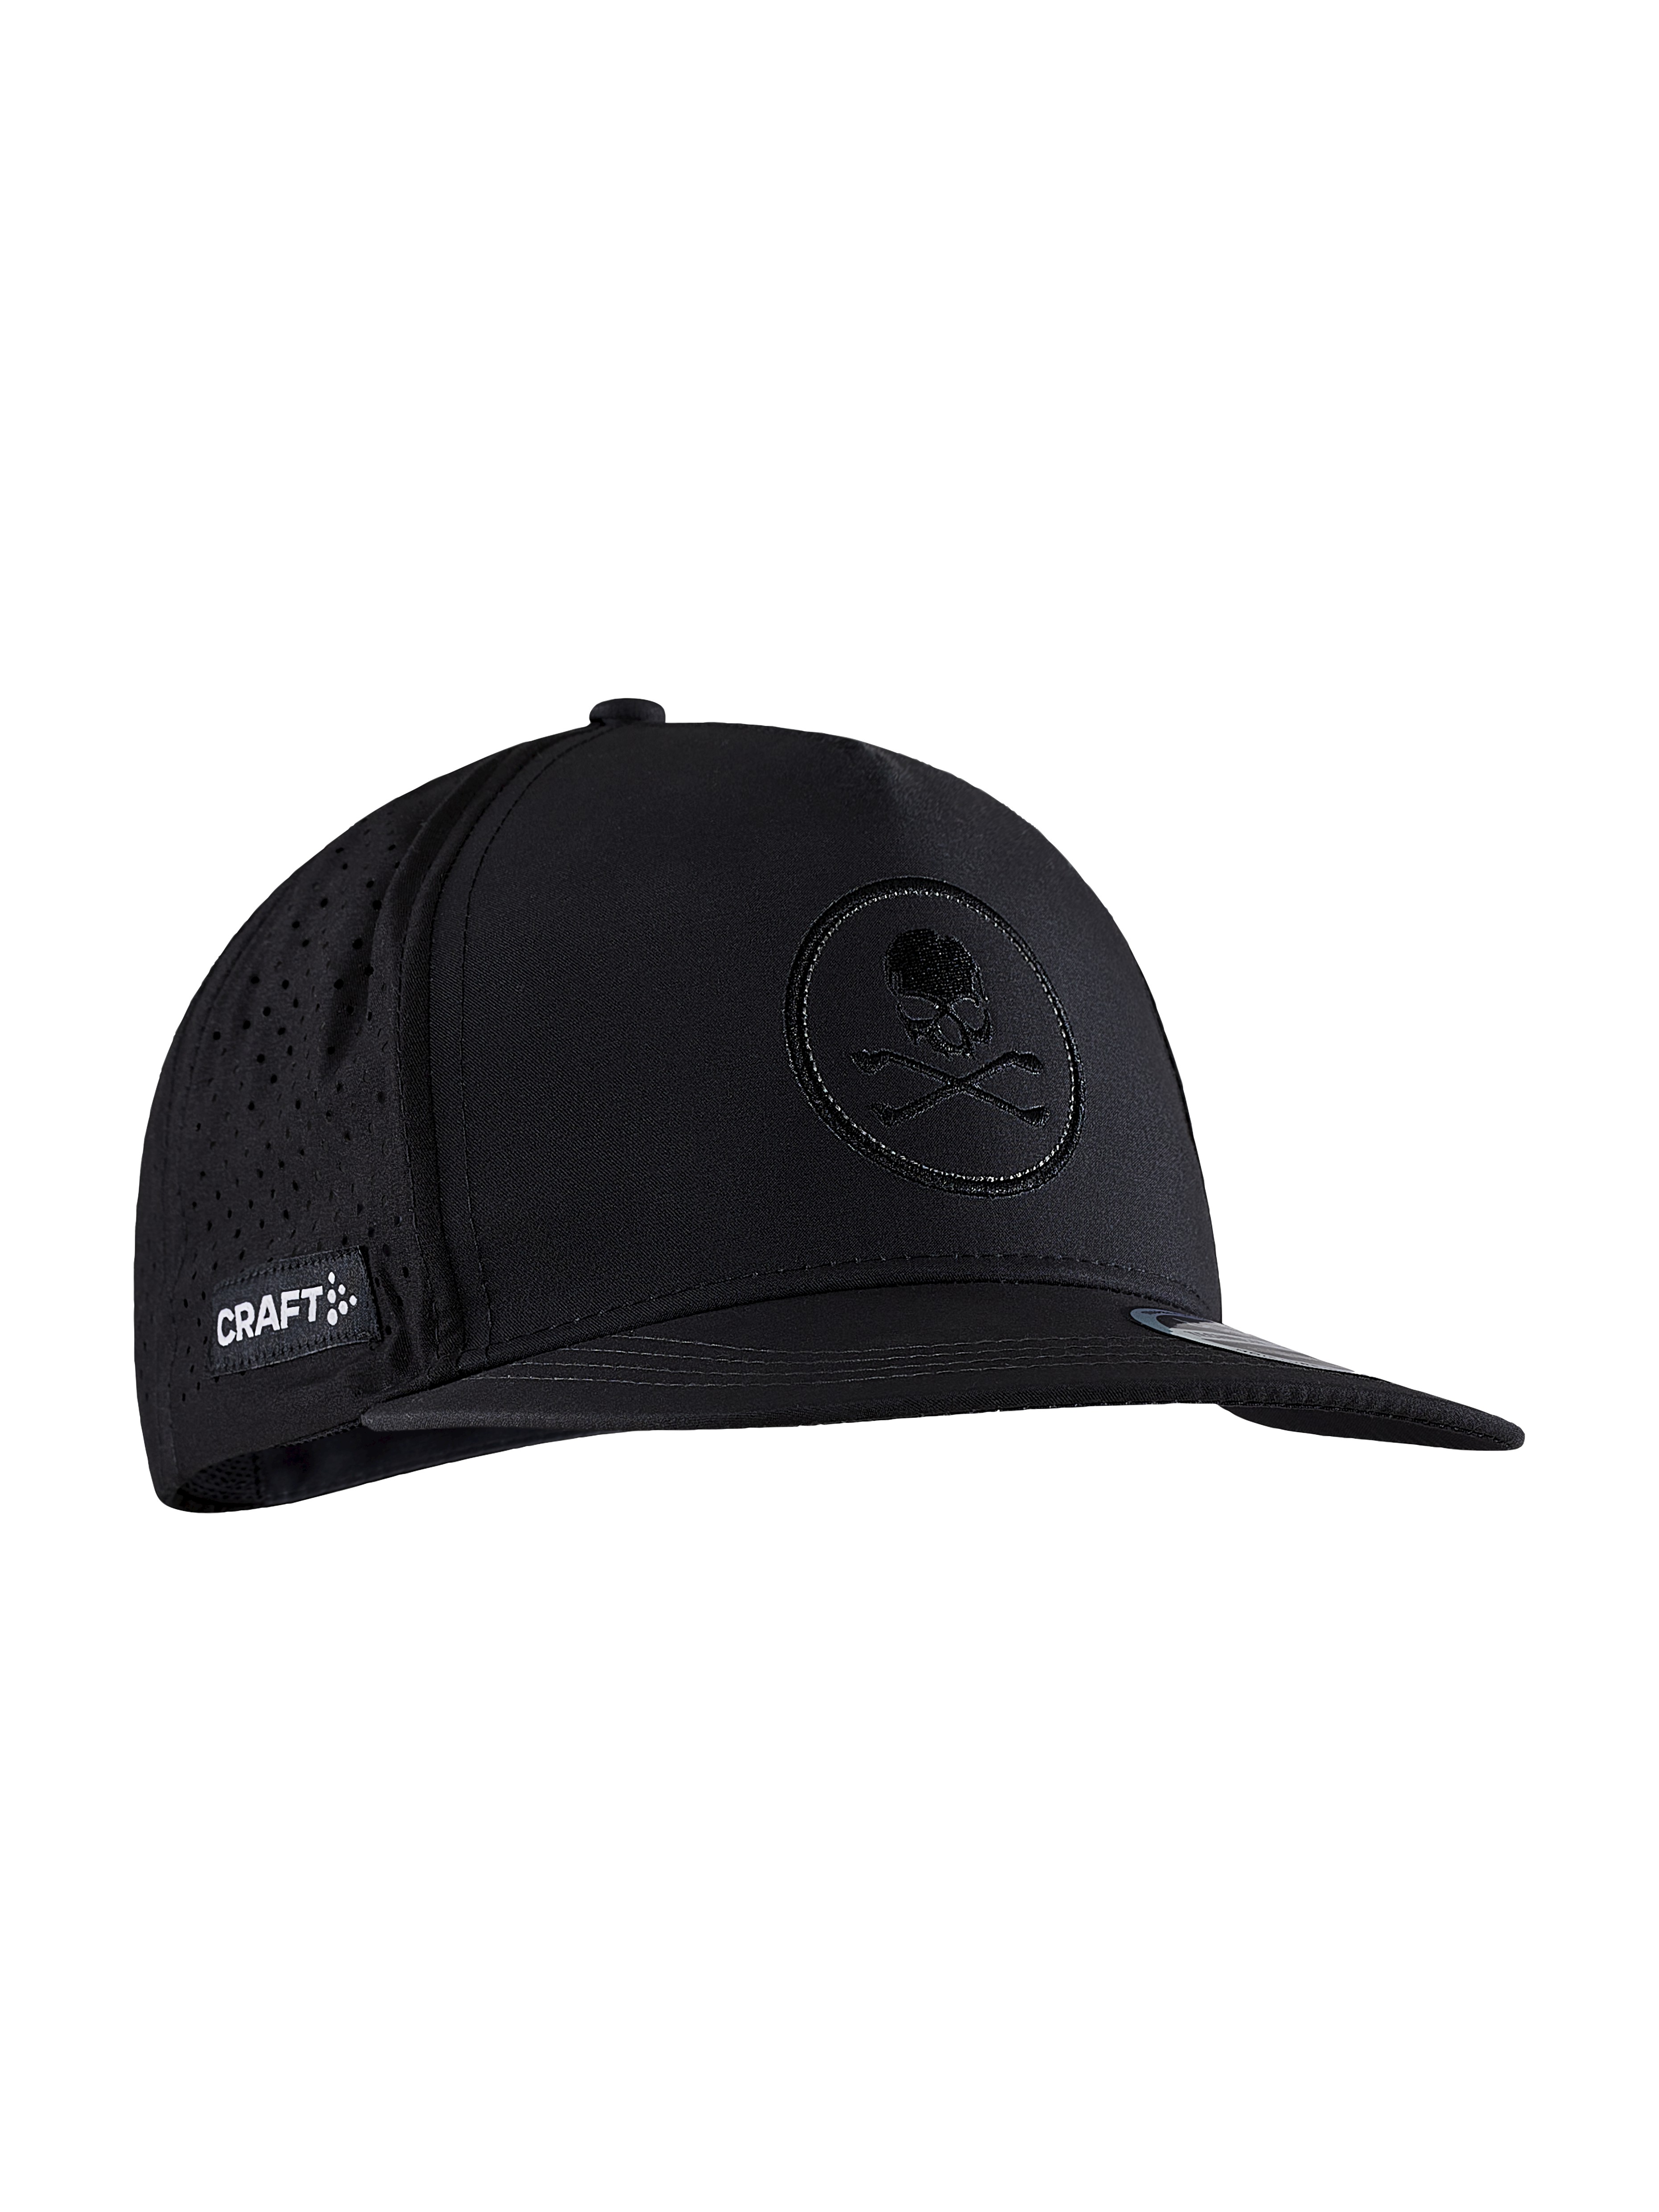 Rook Middel Boodschapper TEAMRIVS CAP - Black | Craft Sportswear